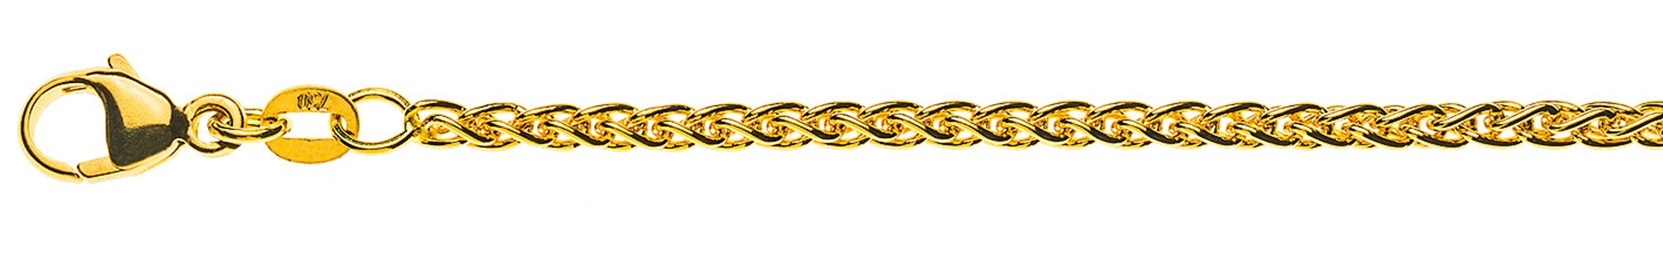 AURONOS Prestige Necklace yellow gold 18K cable chain 42cm 2.5mm